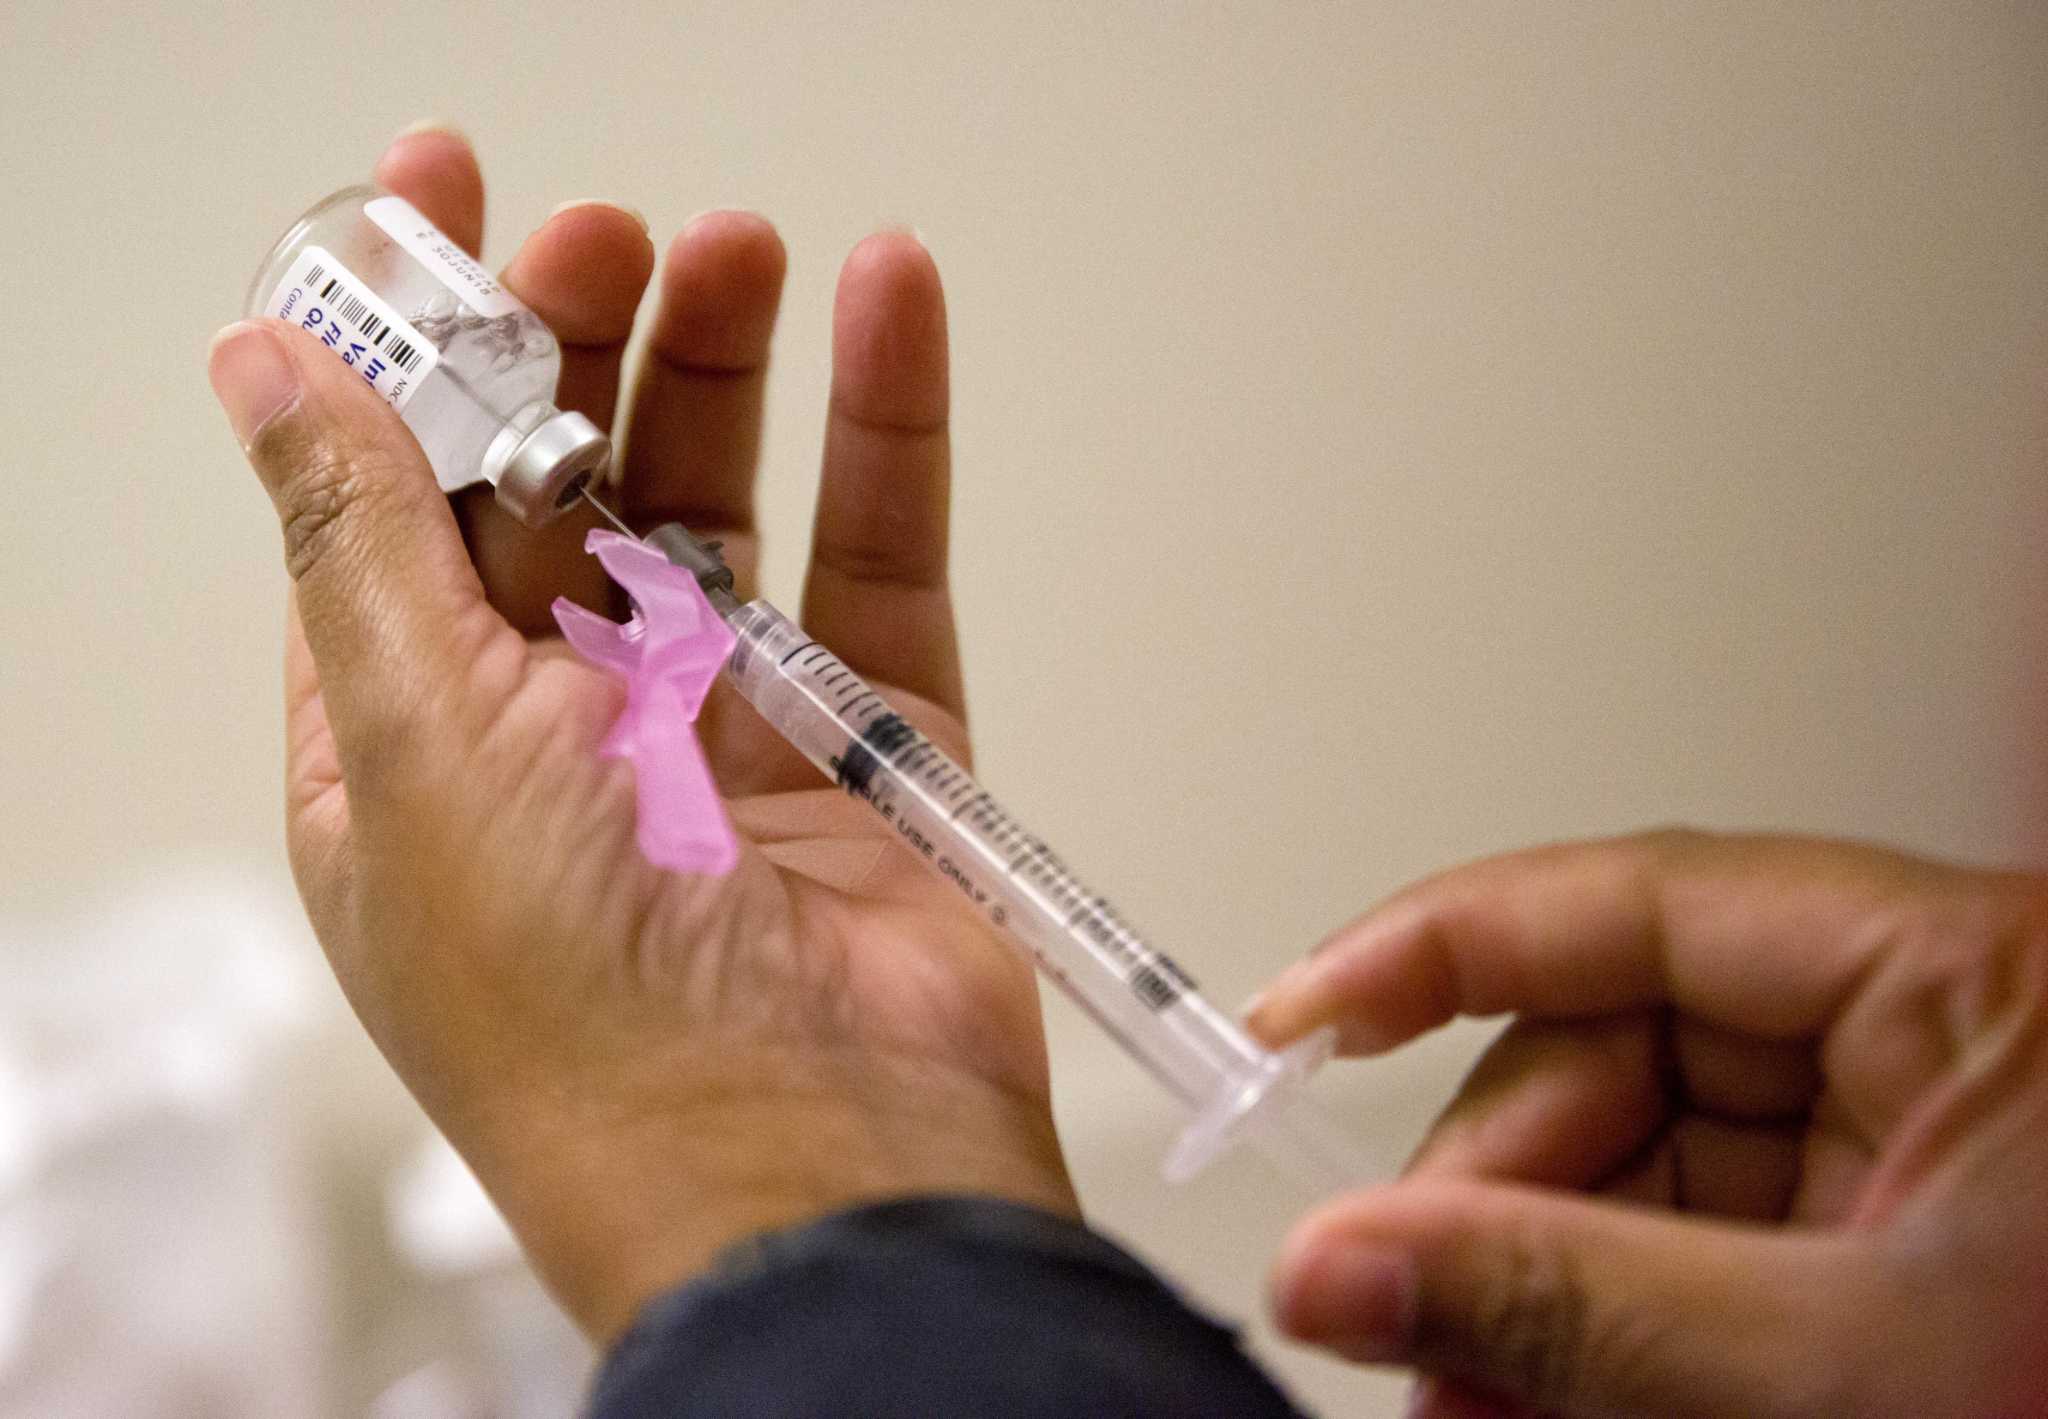 Steps being taken for universal flu vaccine